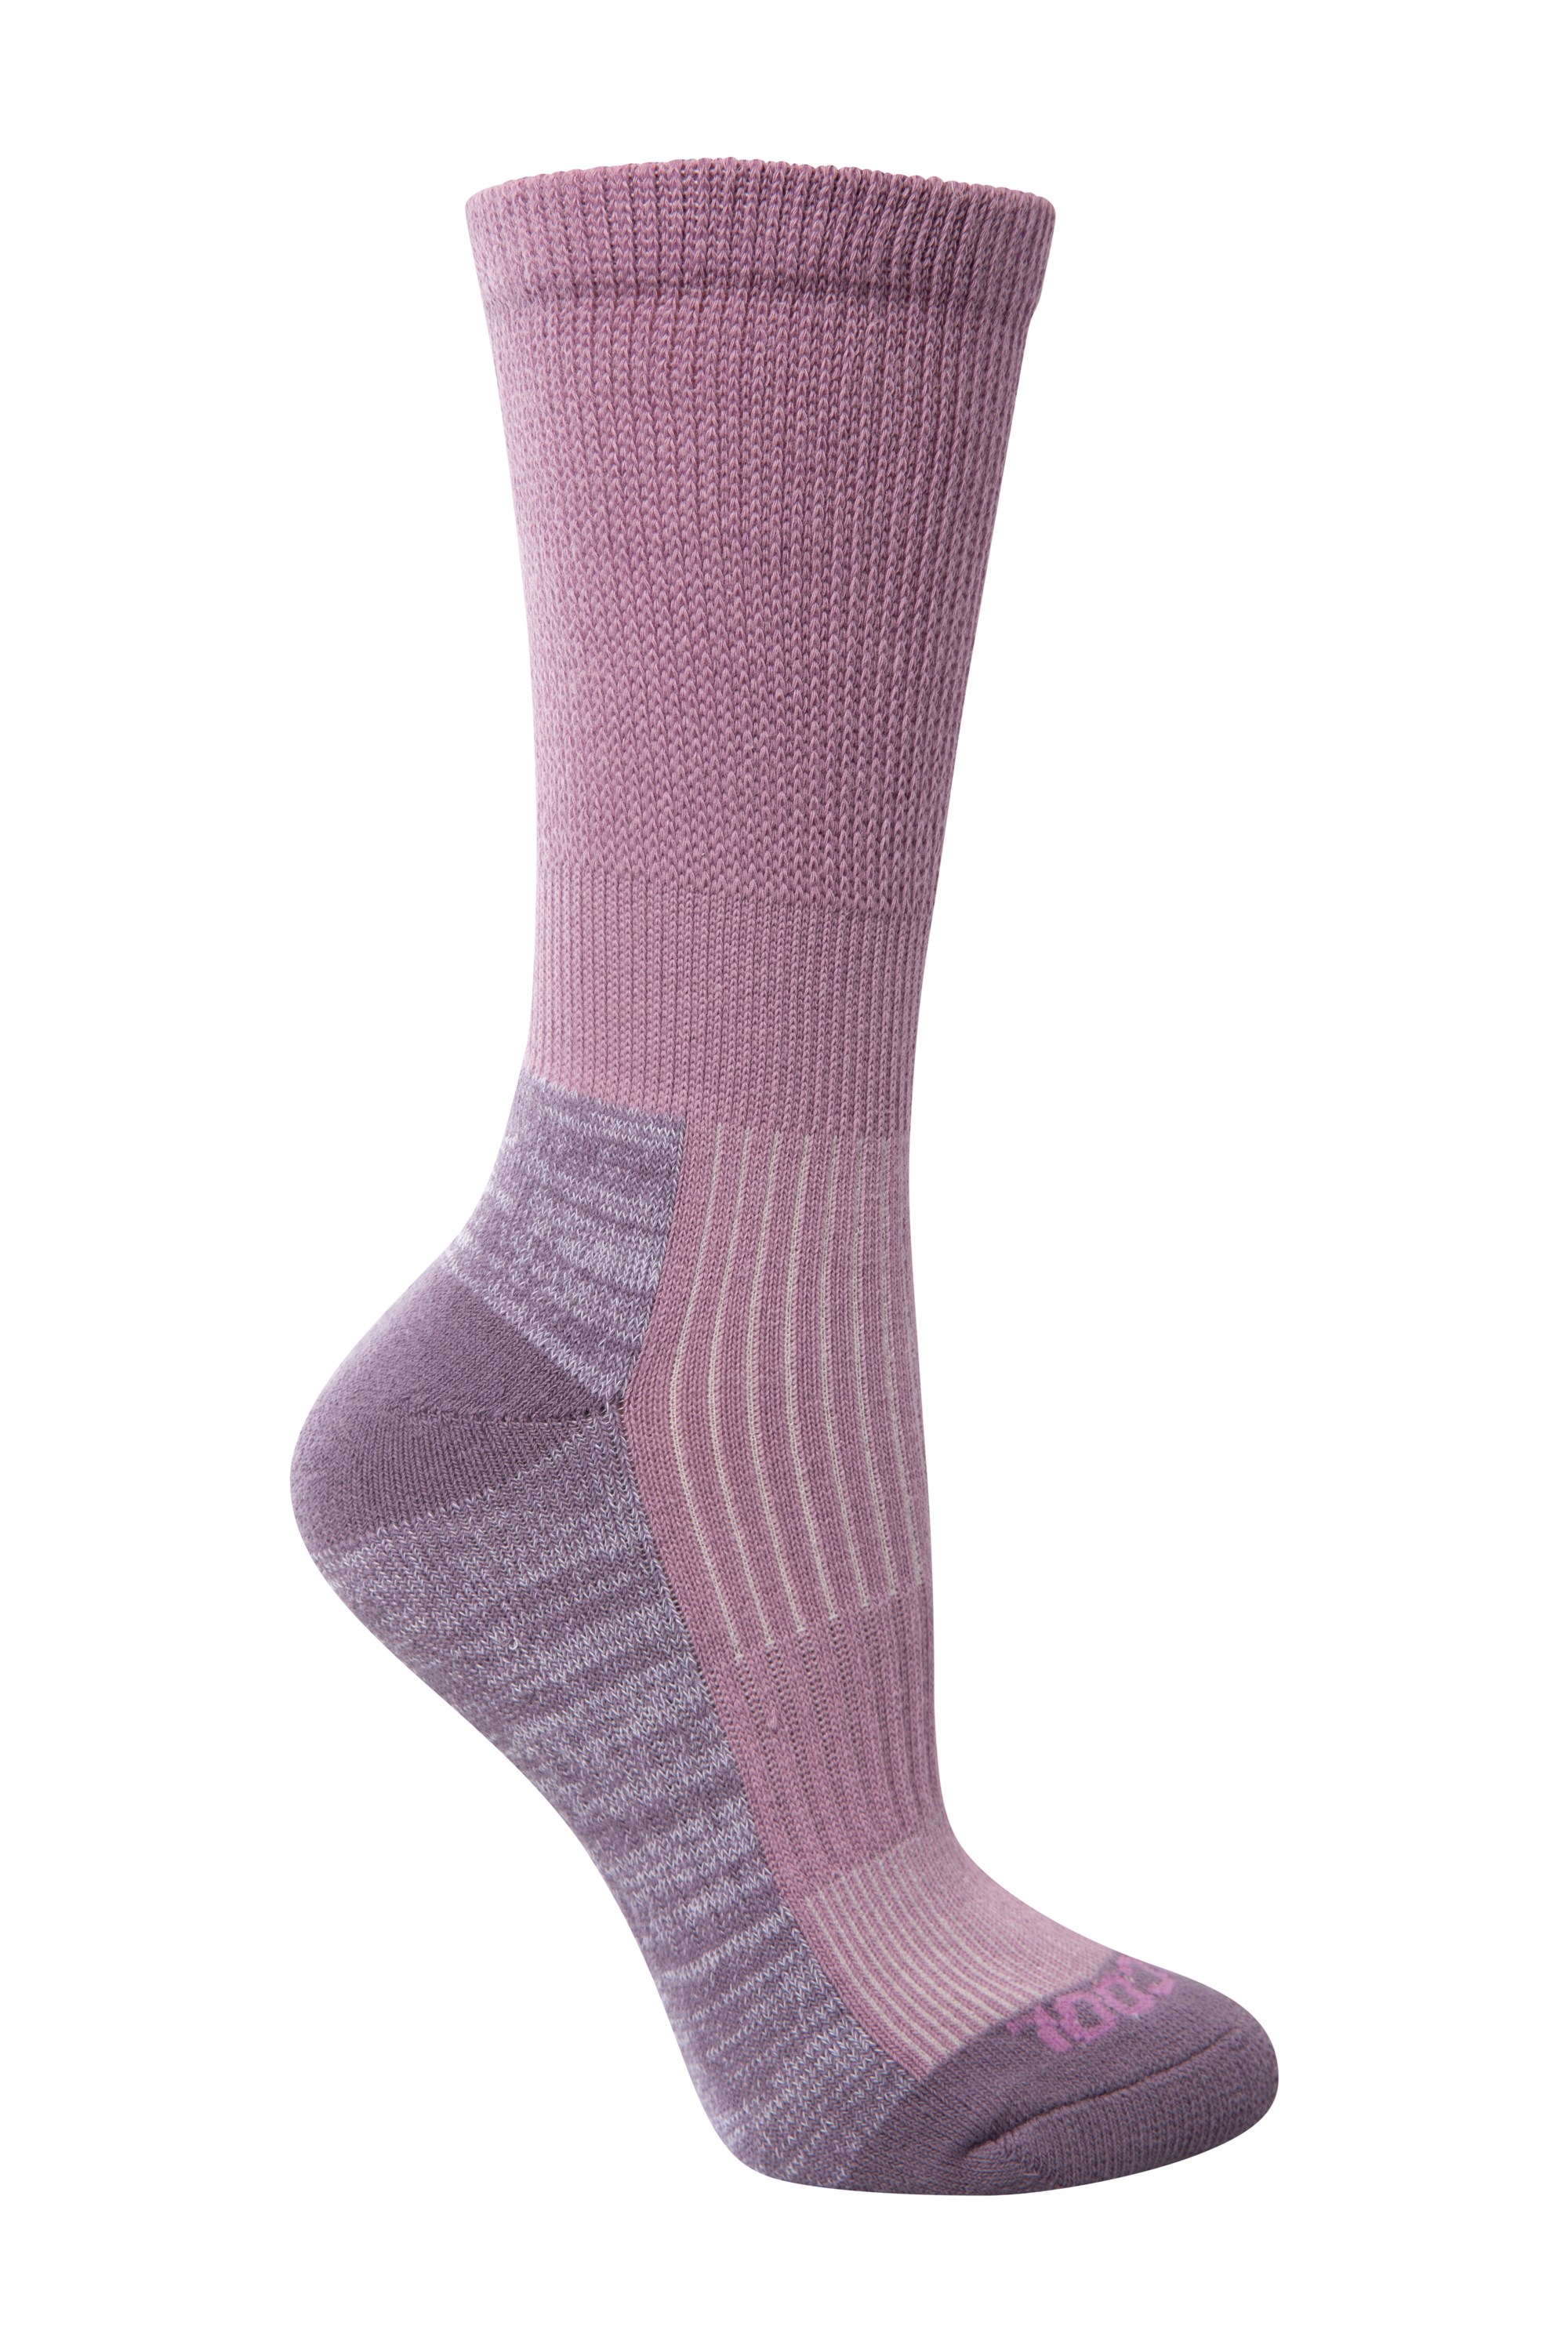 Mountain Warehouse IsoCool Womens Hiker Socks Purple